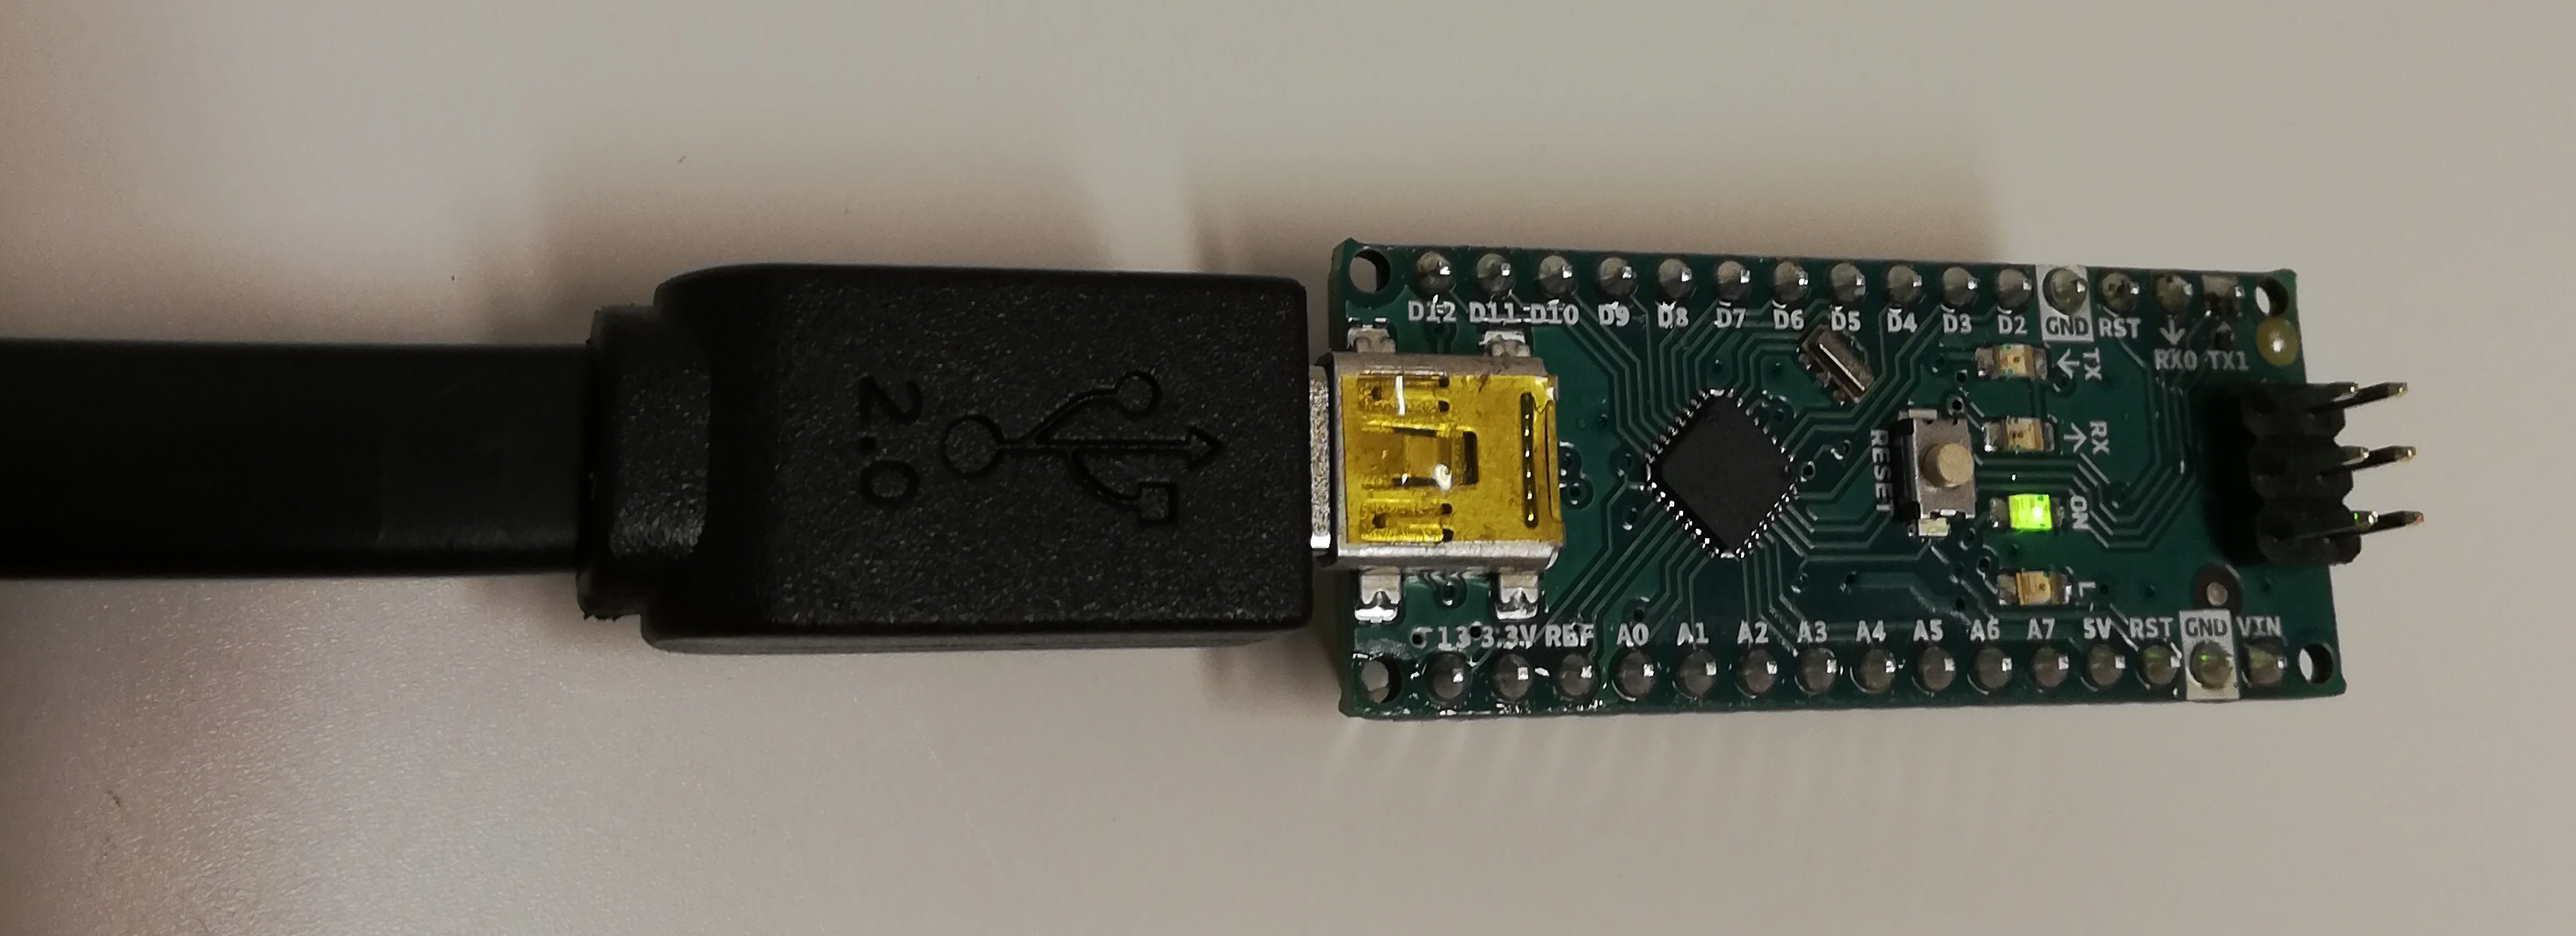 connect arduino pro mini to computer